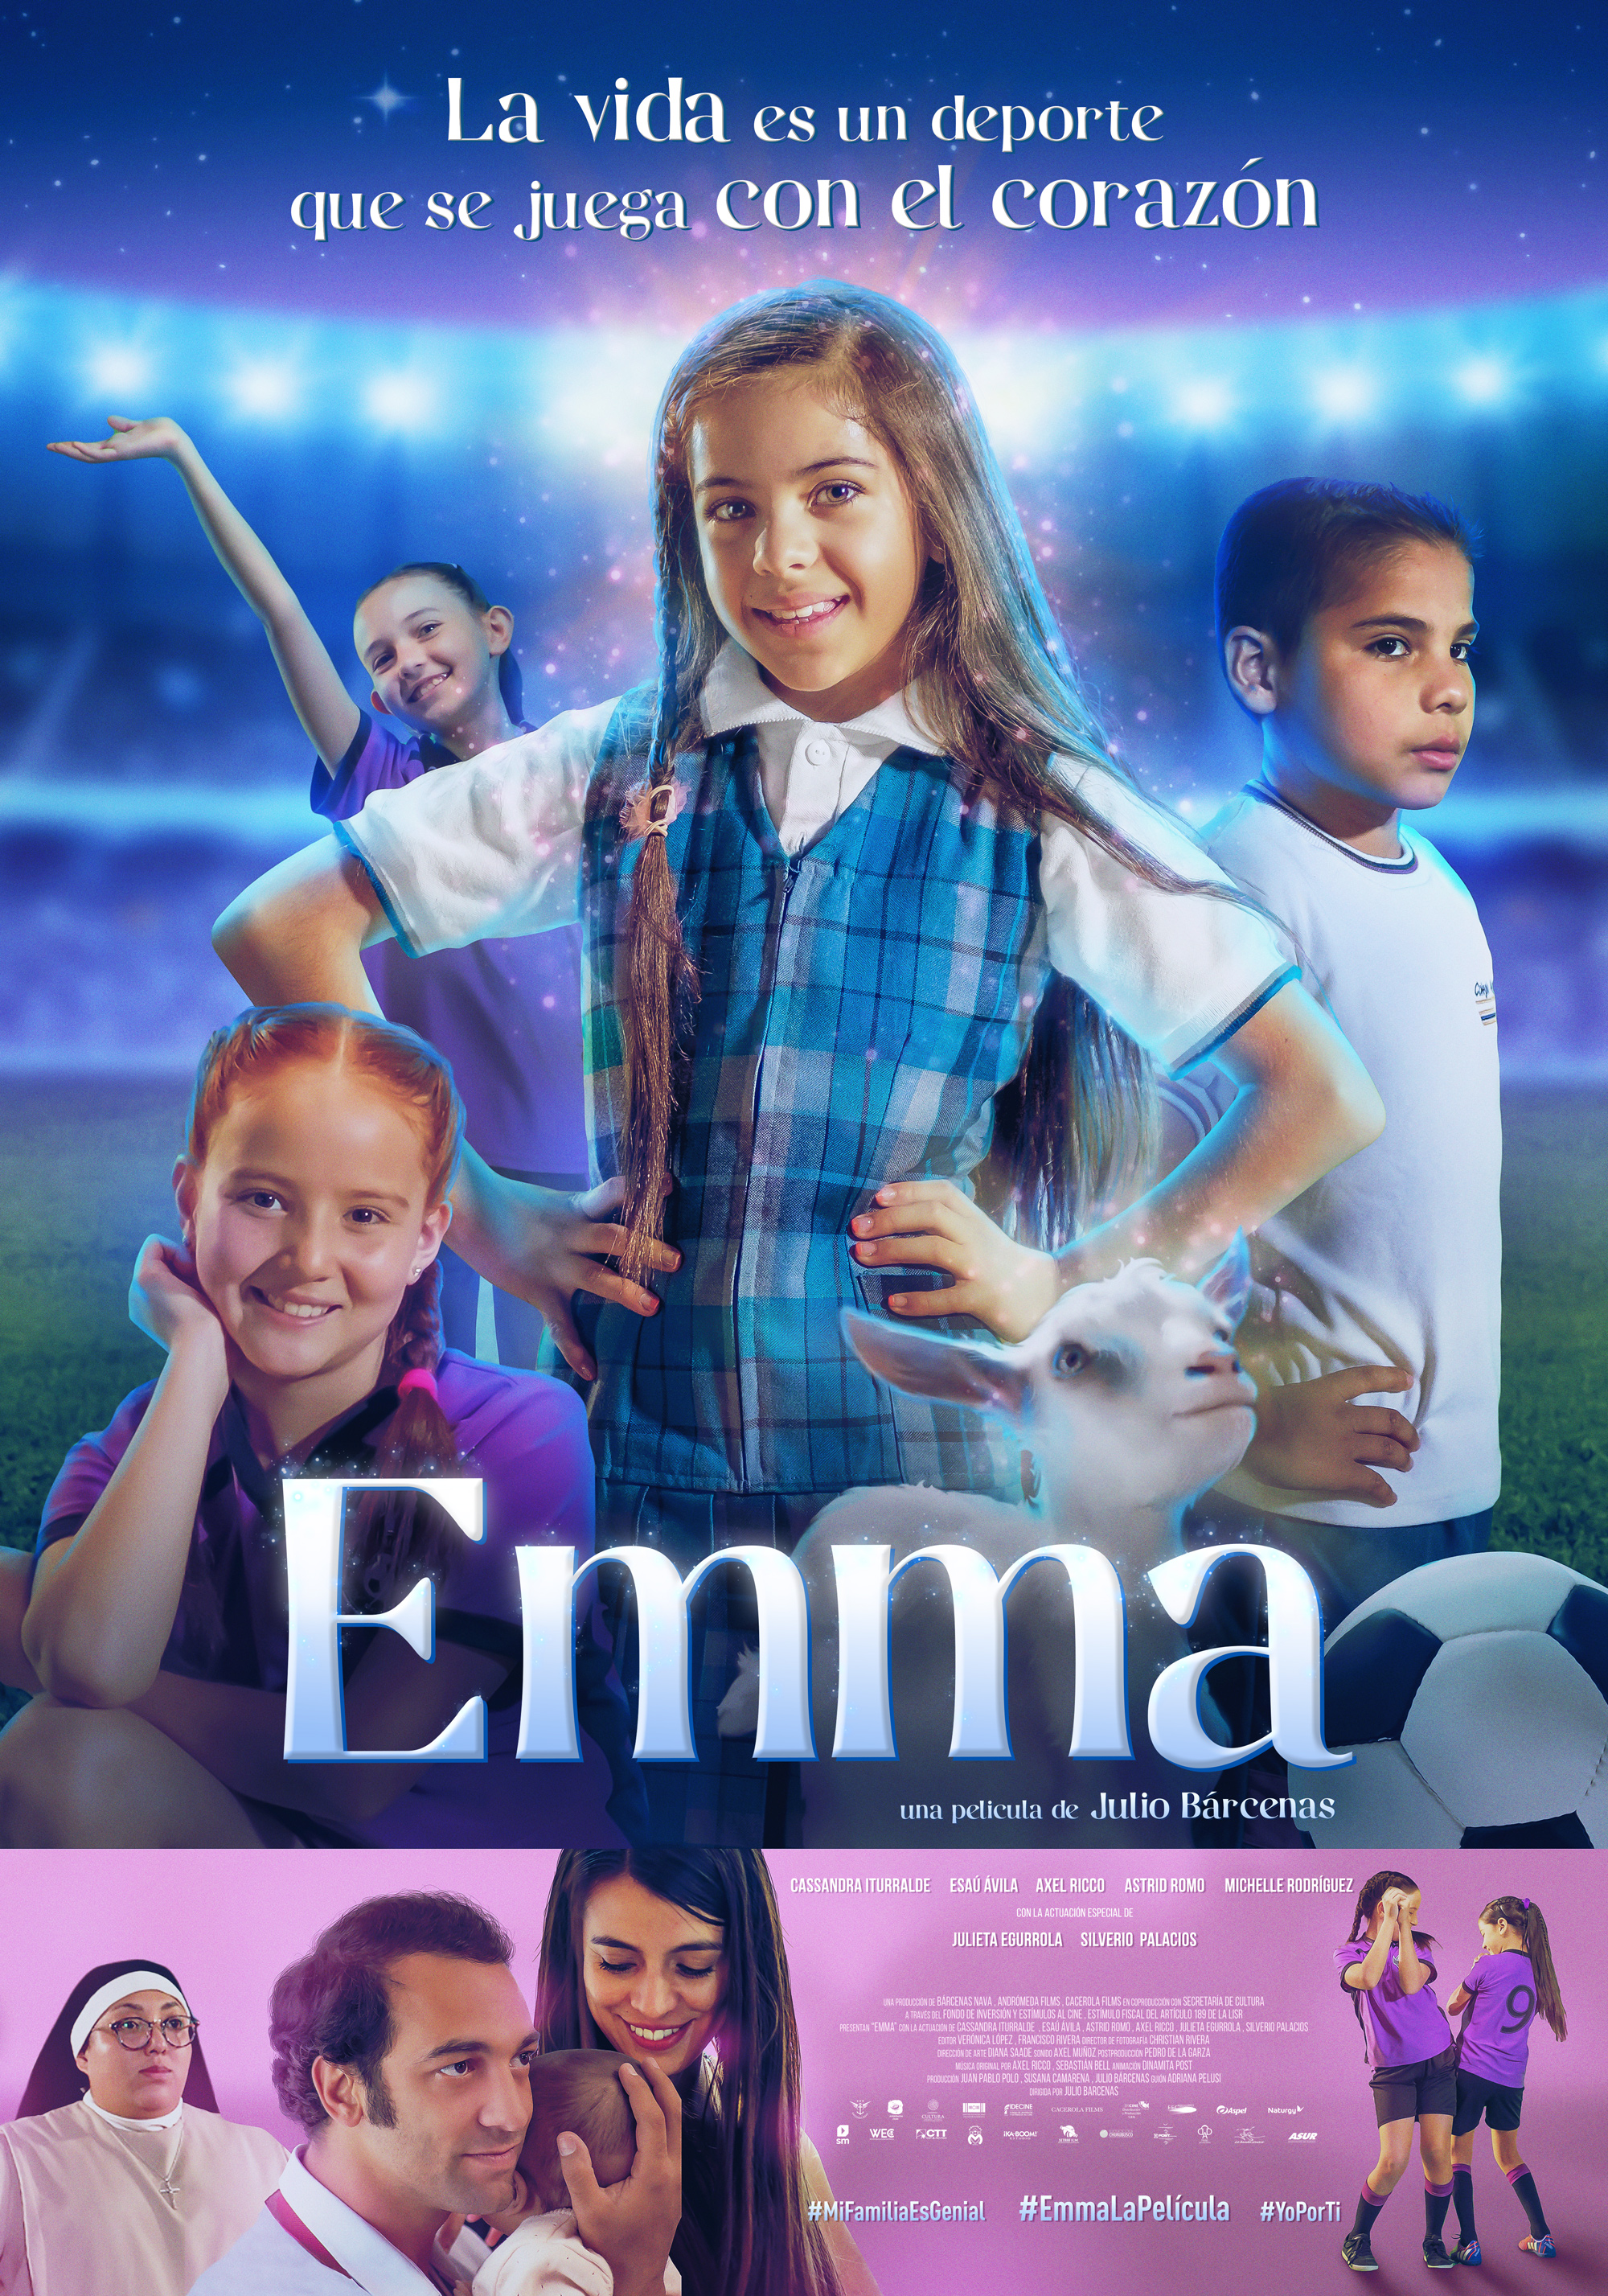 Emma постер